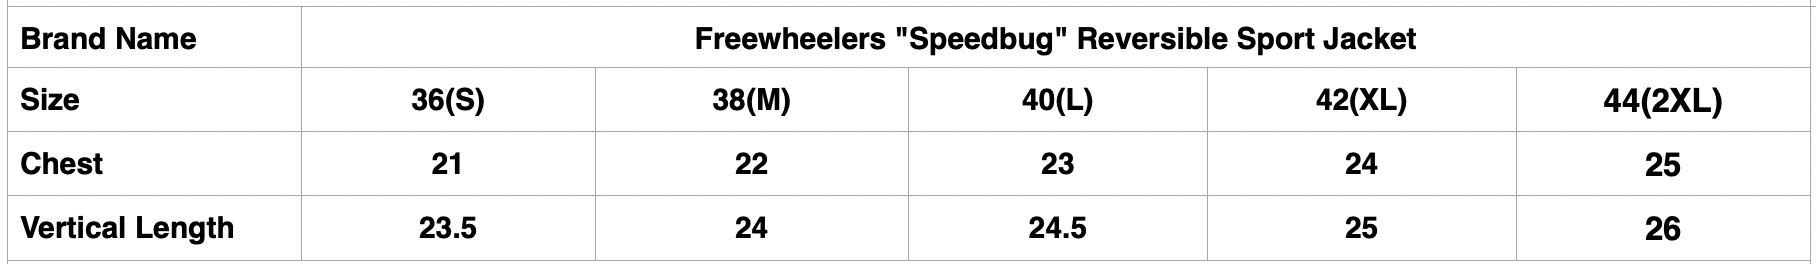 Freewheelers "Speedbug" Reversible Sport Jacket